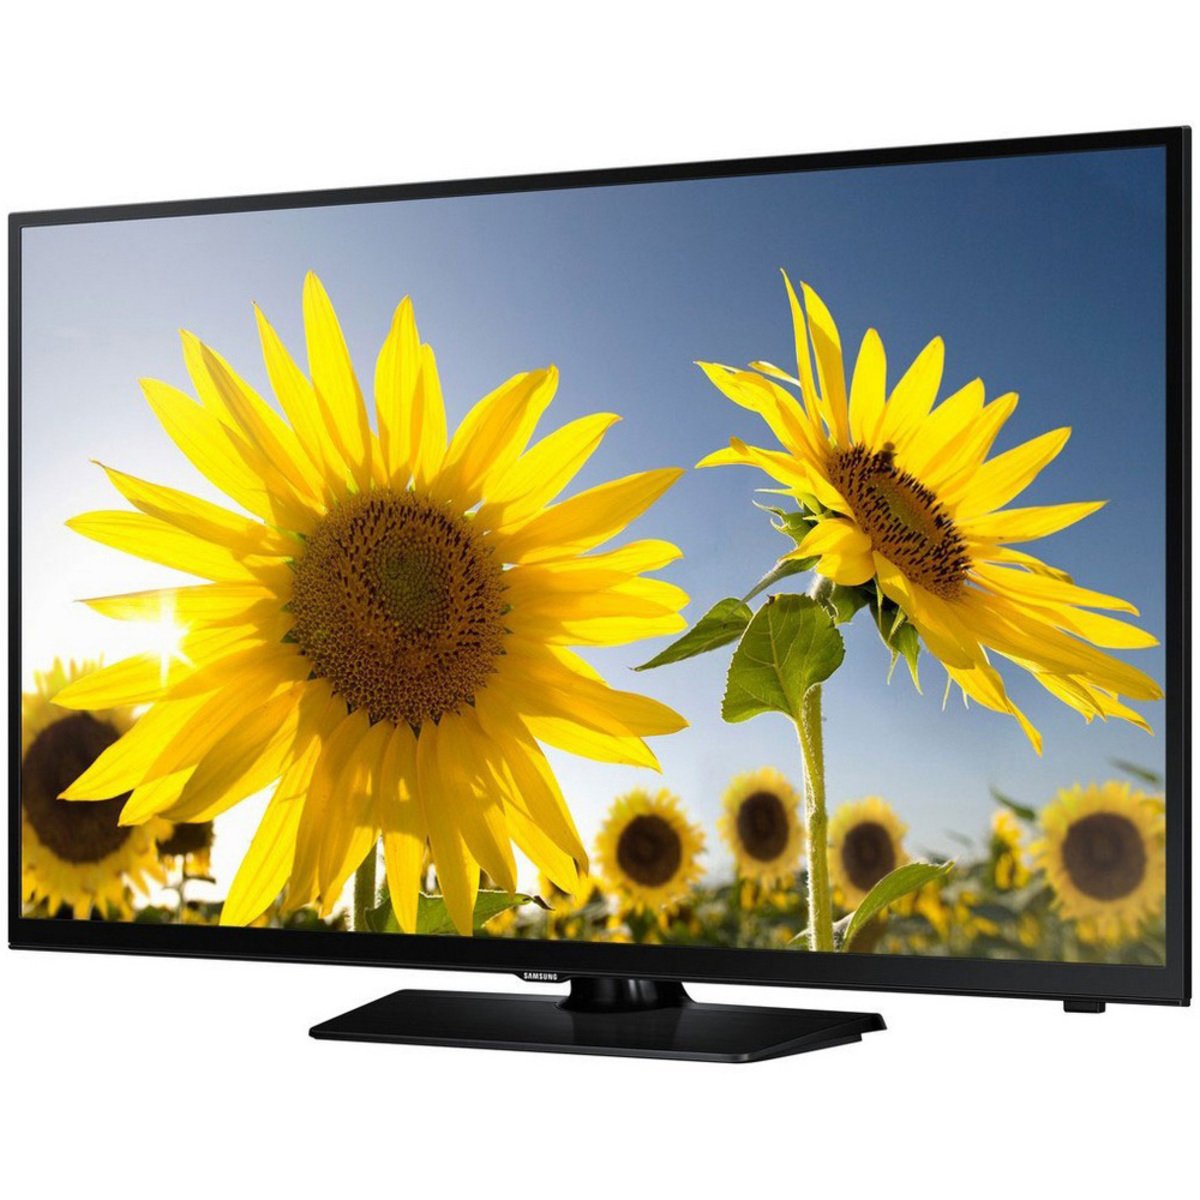 Samsung LED TV UA40H4200 40inch